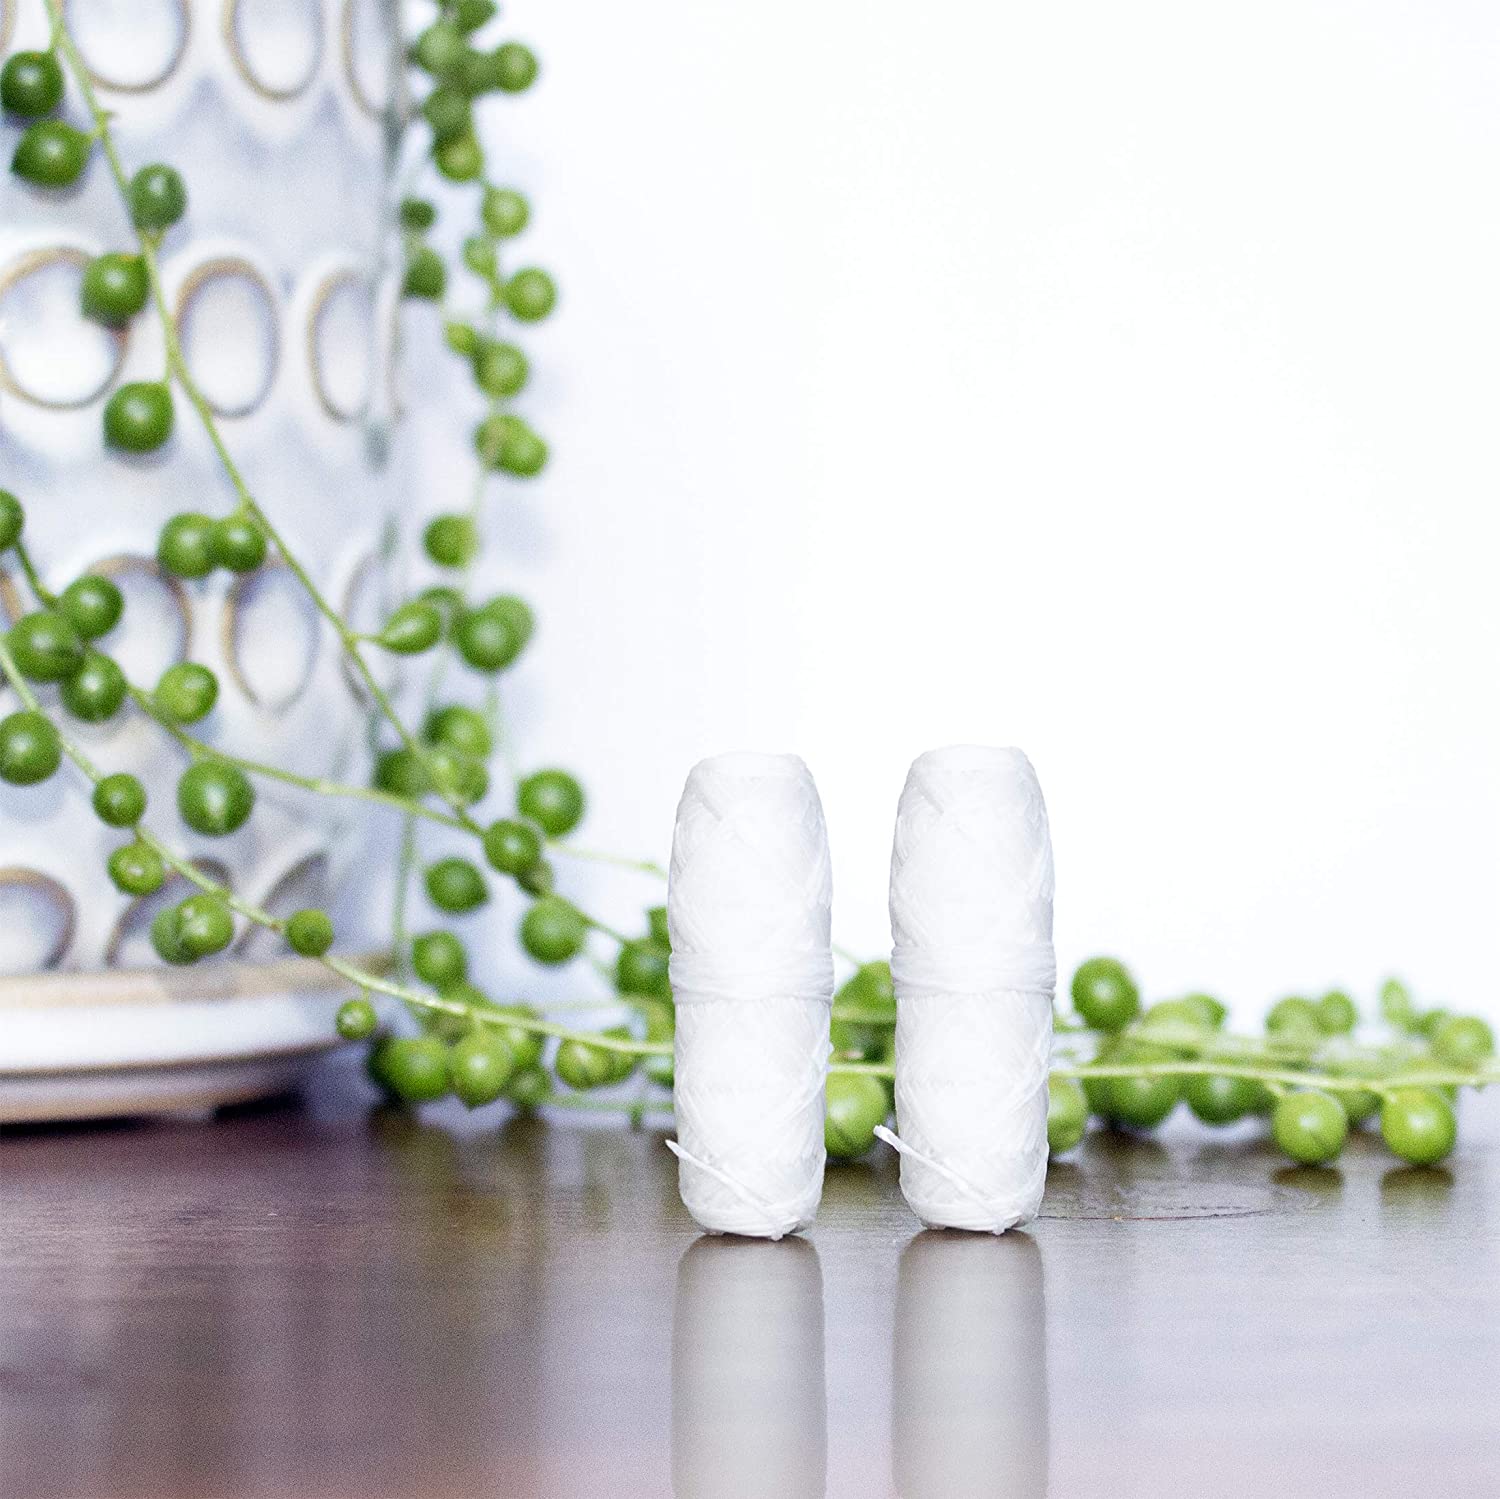 Biodegradable Mint Flavor Candelilla Waxed Corn Vegan Dental Floss in Glass bottle Featured Image